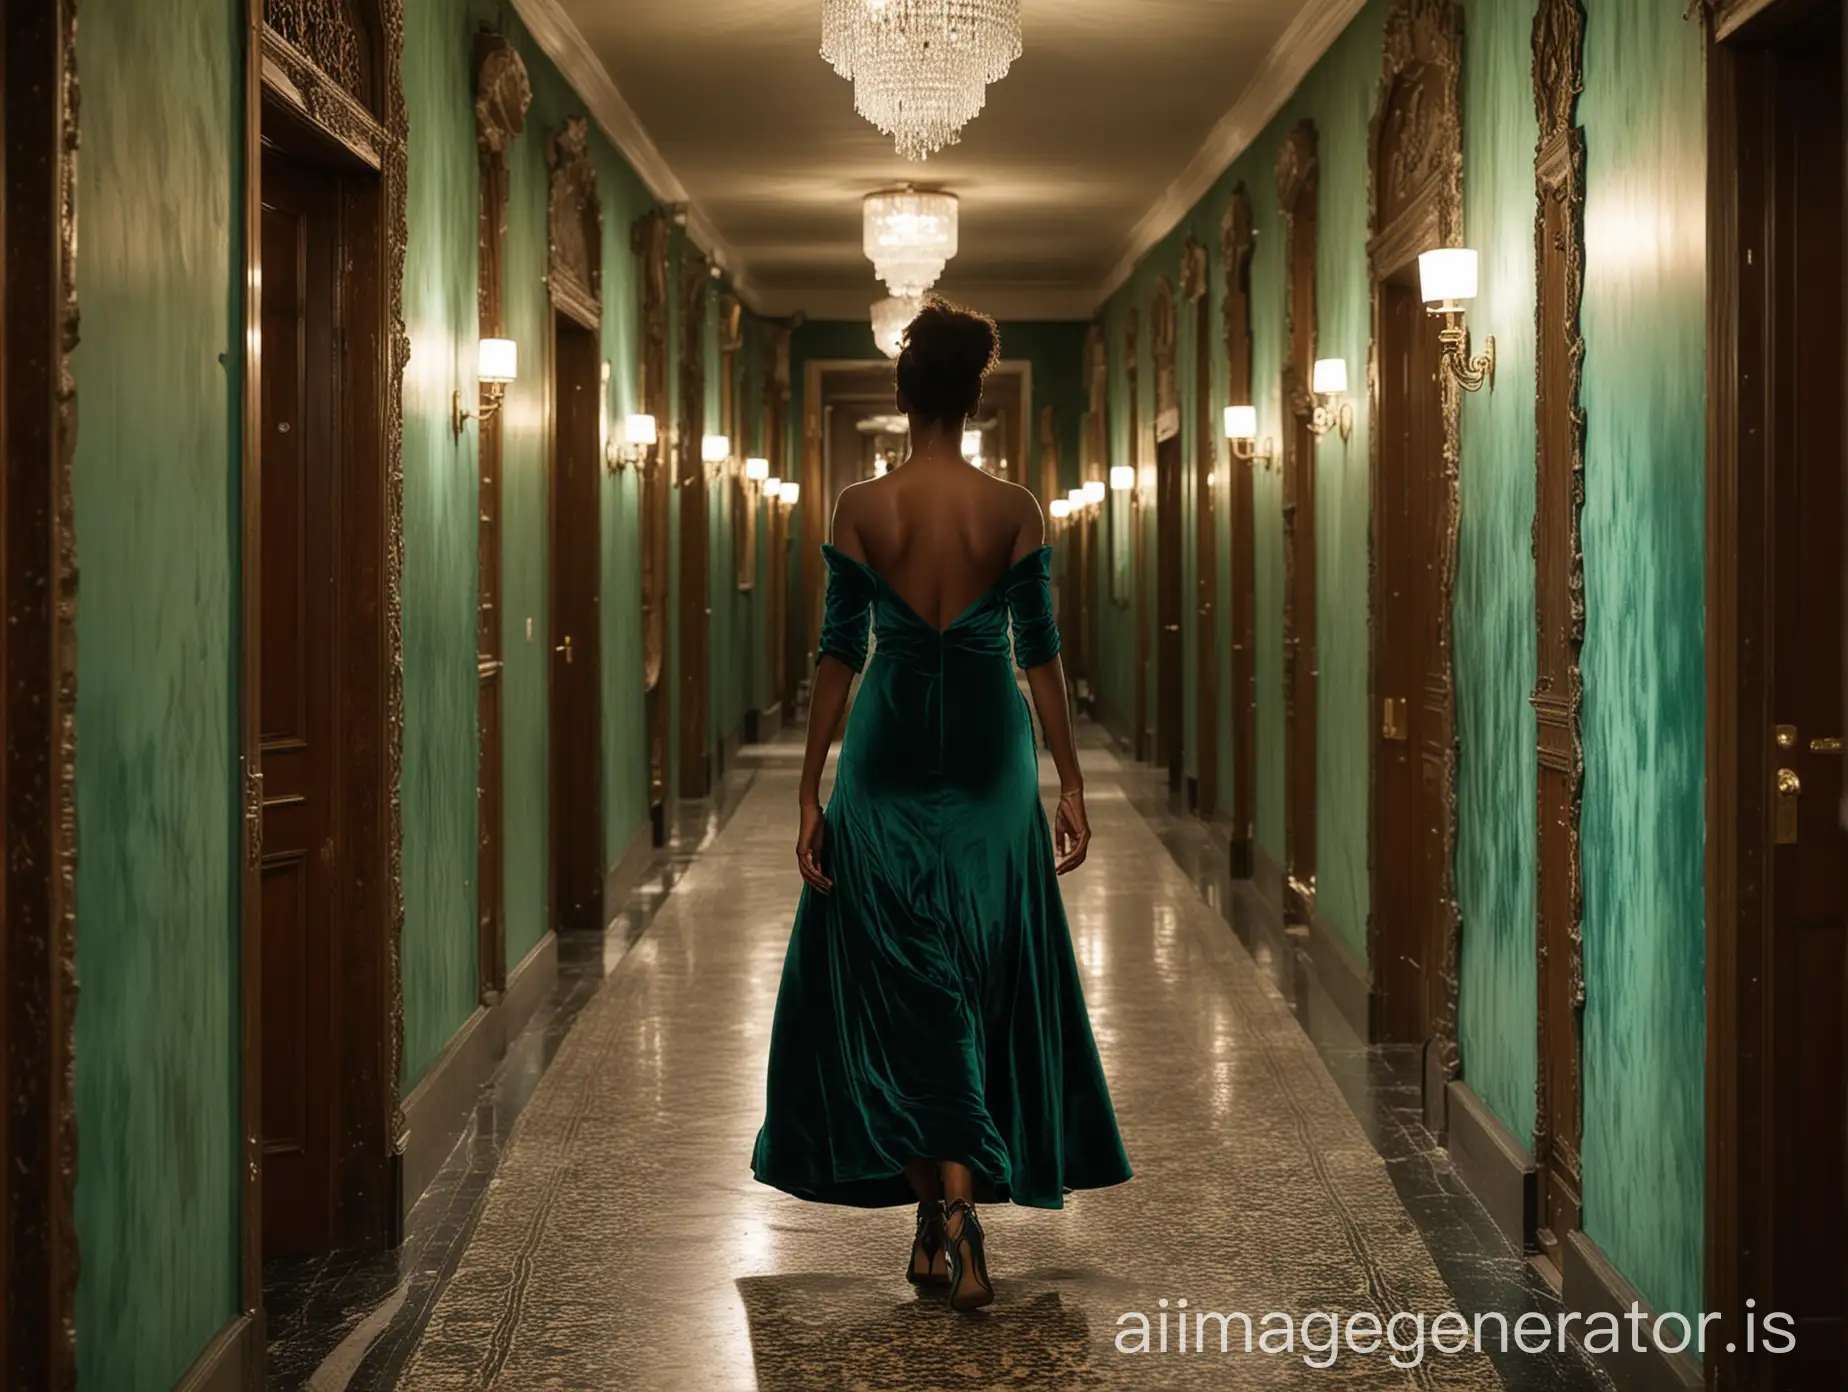 Young-Black-Girl-in-Emerald-Velvet-Dress-Walking-in-Luxurious-Hotel-Corridor-at-Night